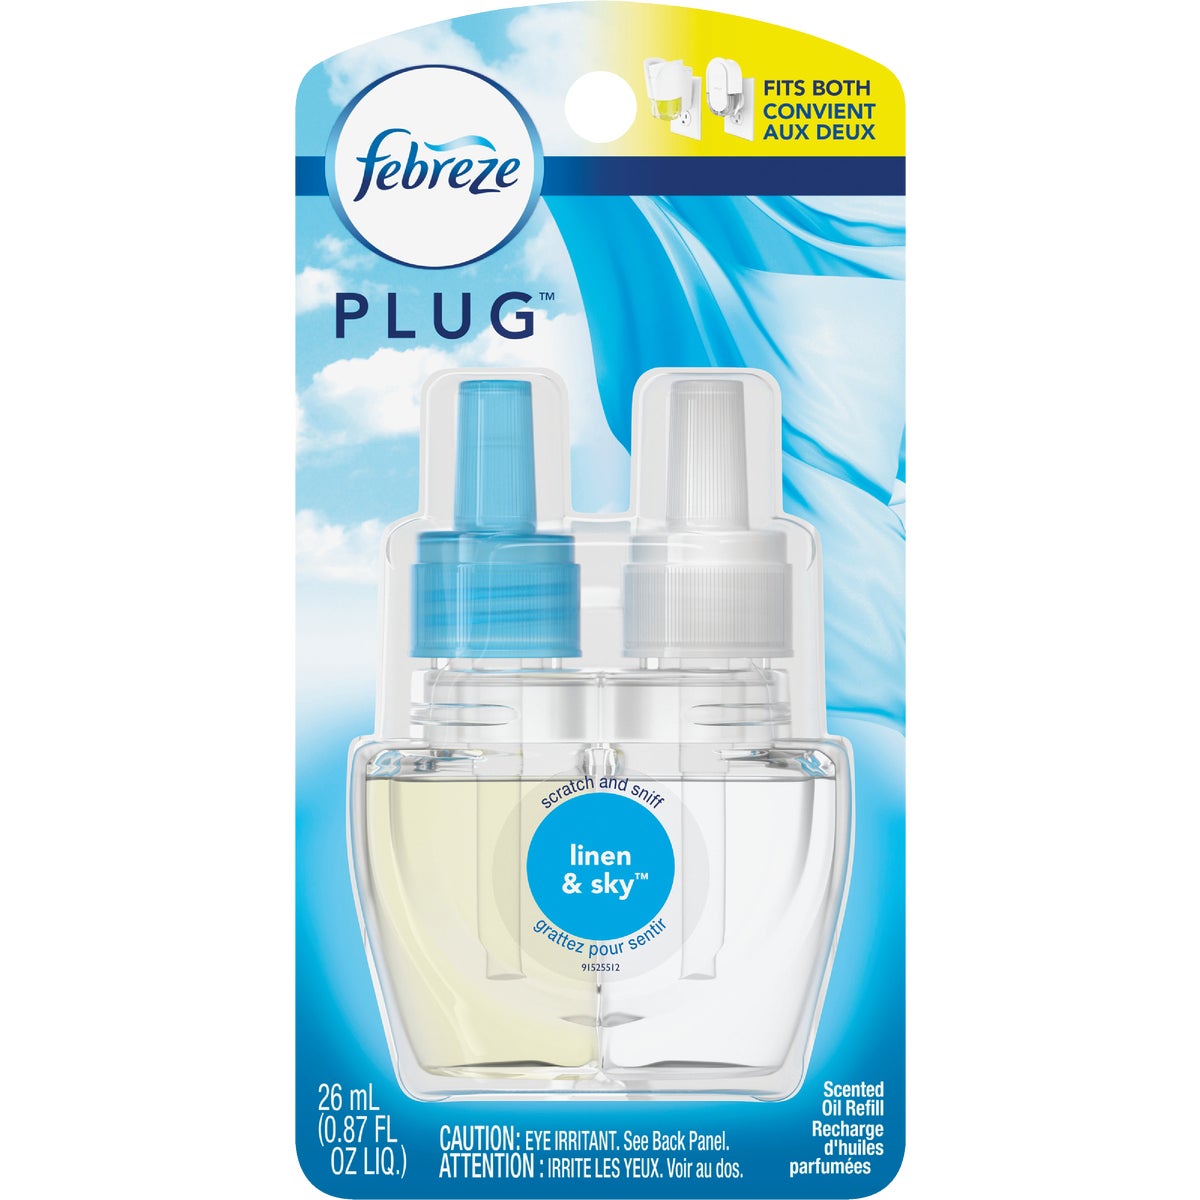 Item 627011, Febreze Plug scented oil refill for Febreze Plug-In Warmer.